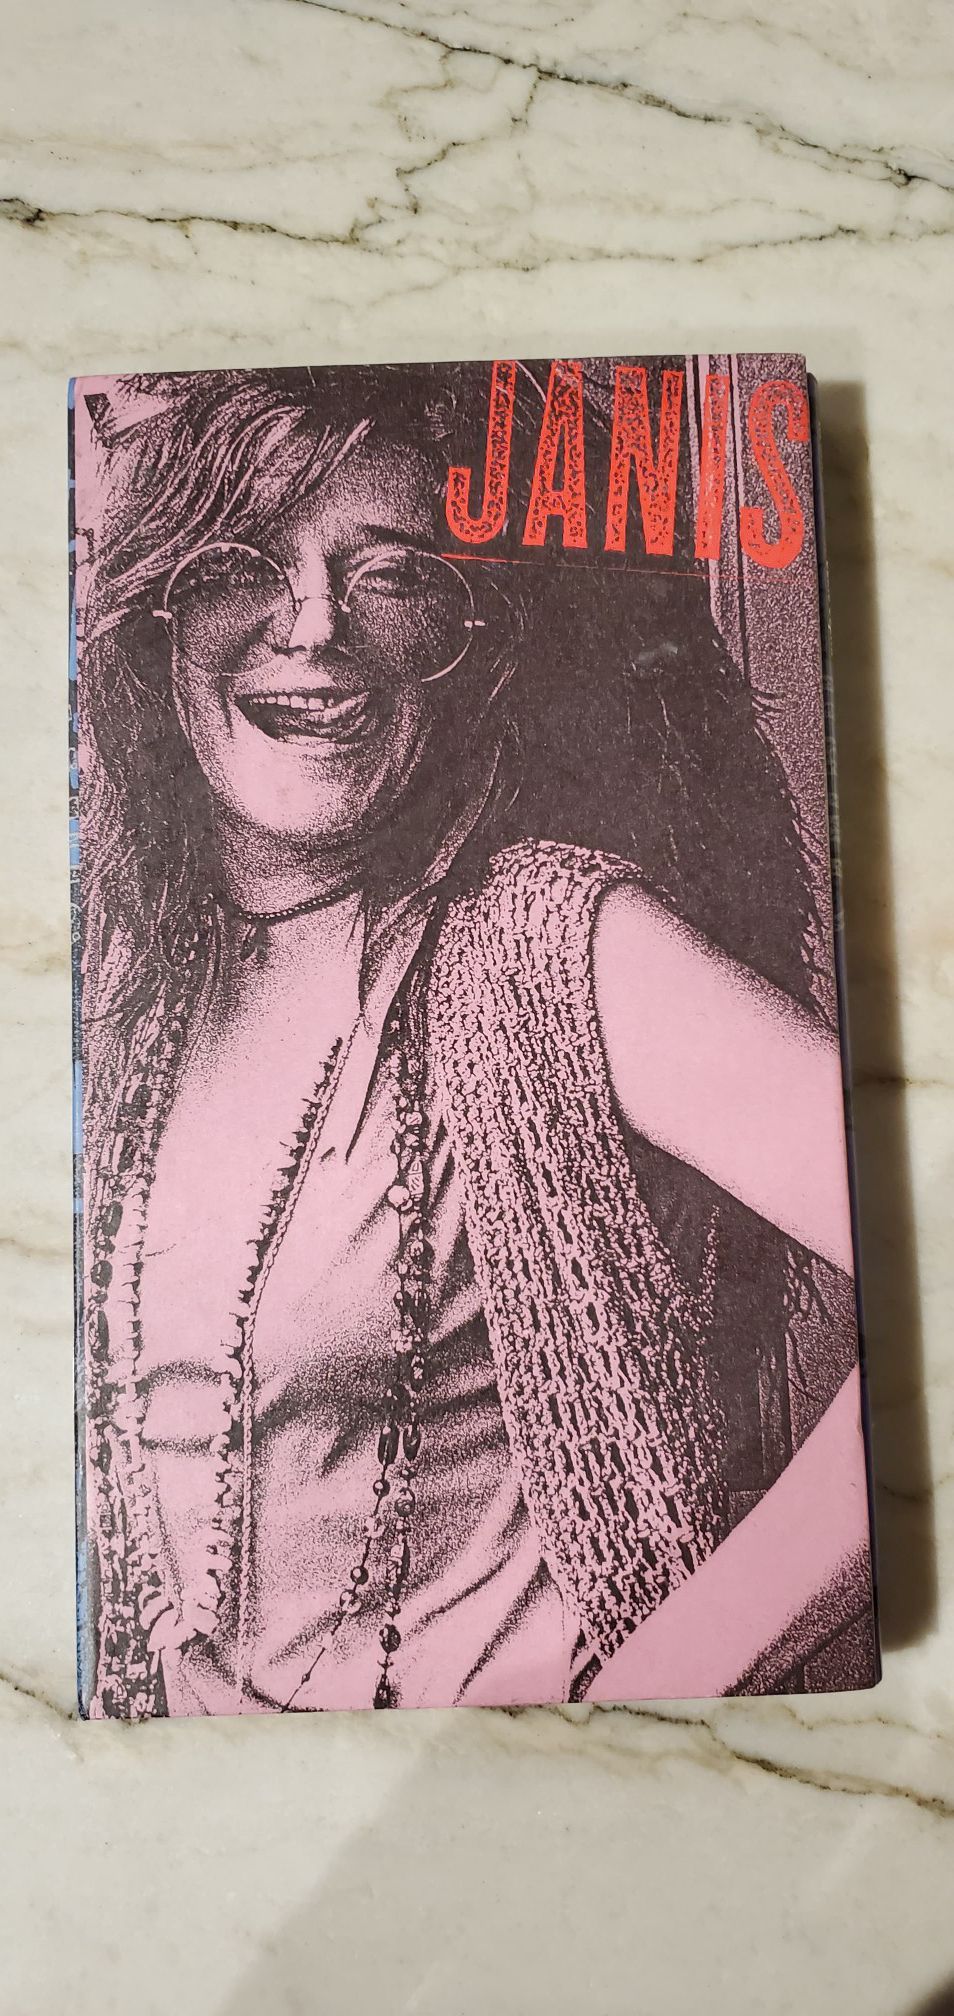 Janis Joplin 'Janis' 3 CD Box Set